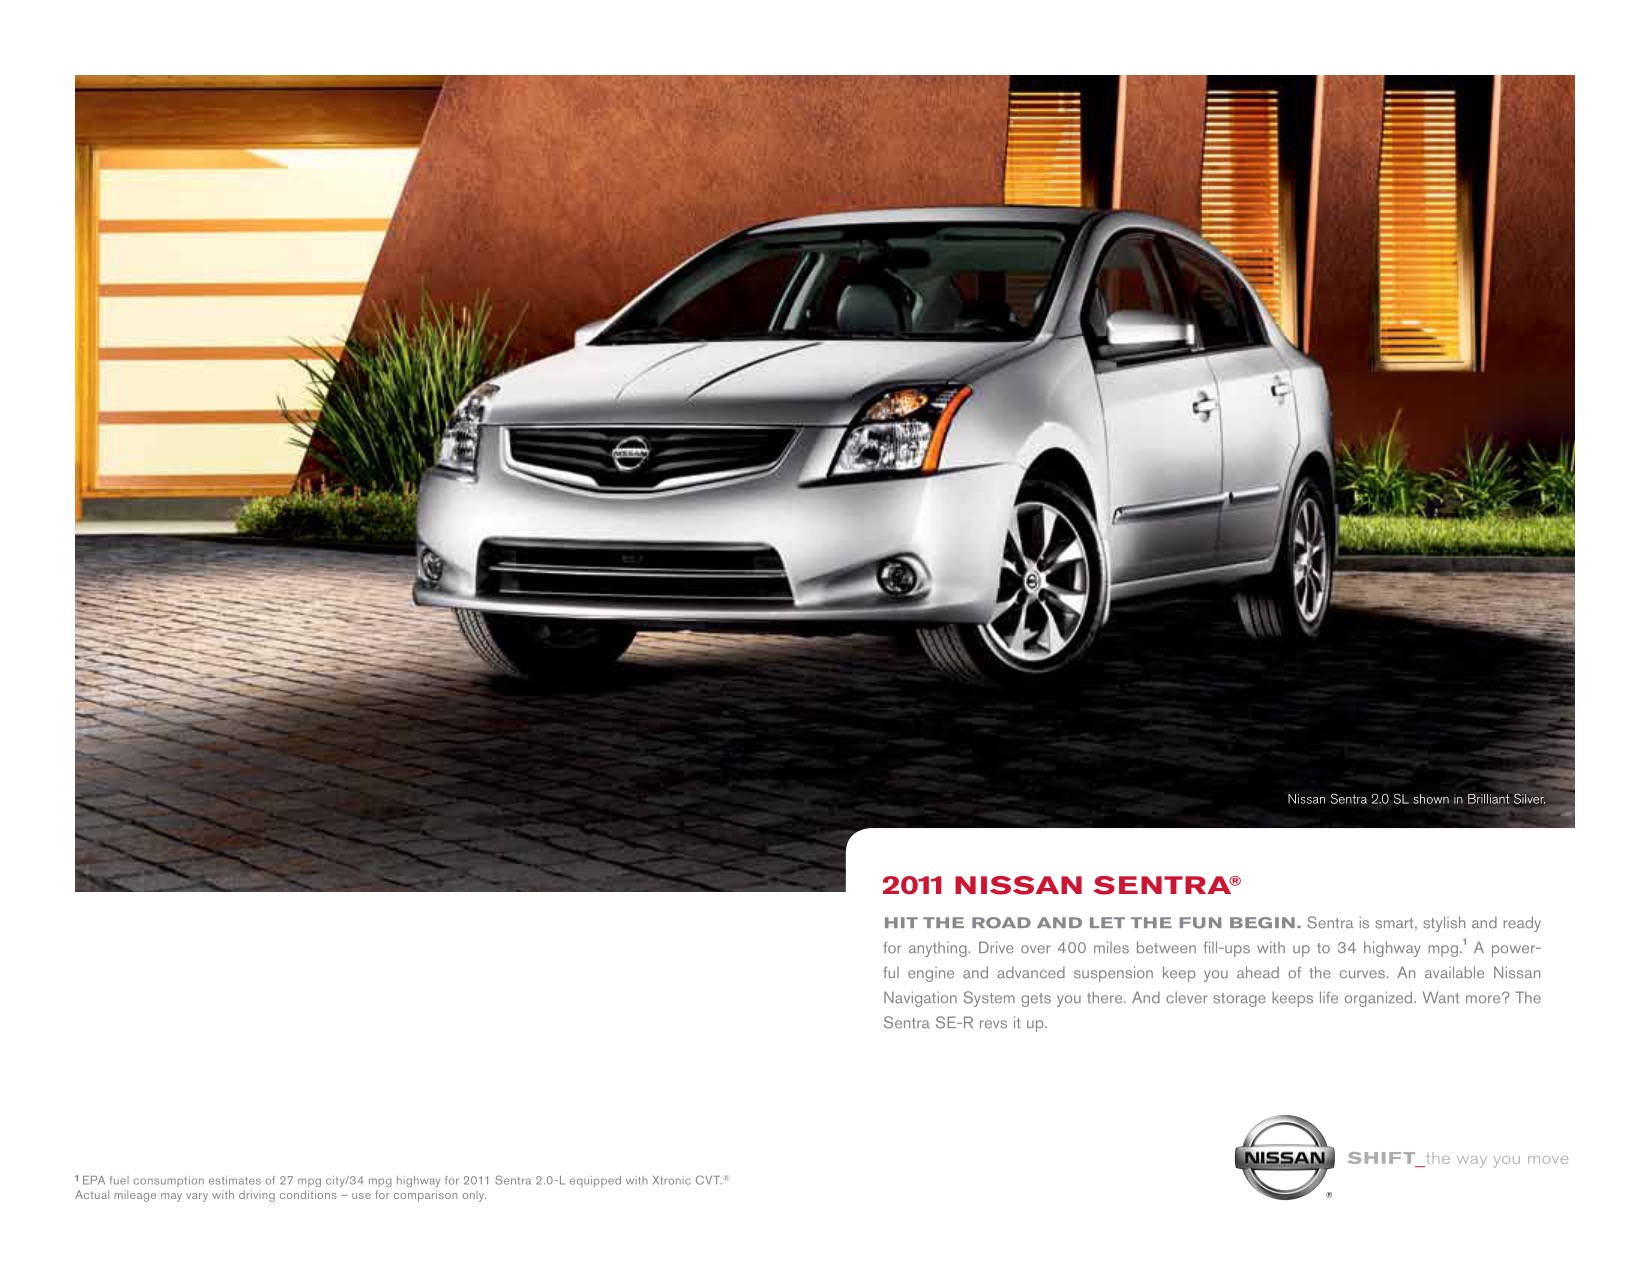 2011 Nissan Sentra Brochure